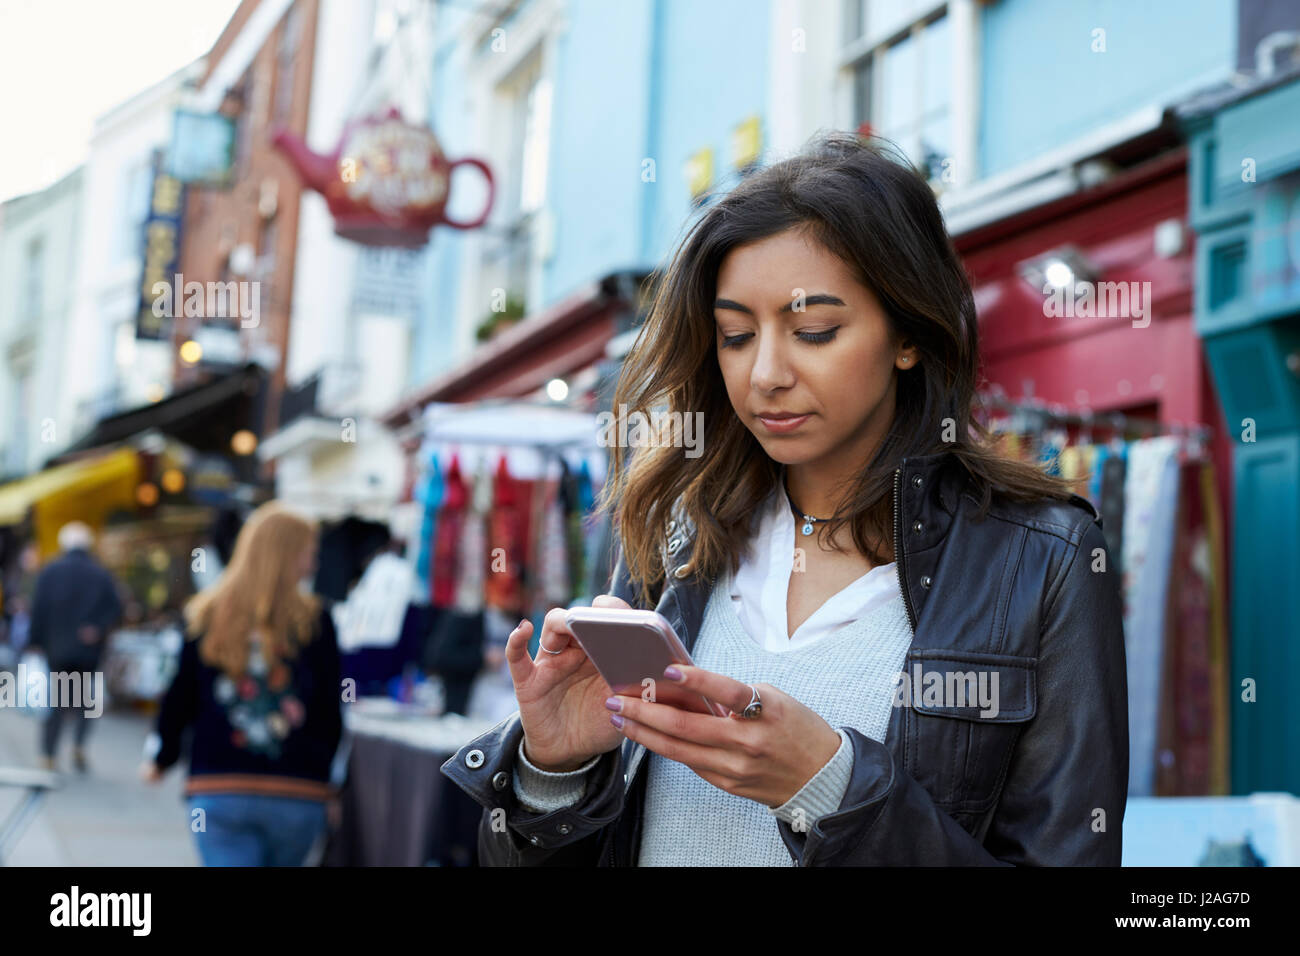 Young woman using phone in Portobello Road market, close up Stock Photo